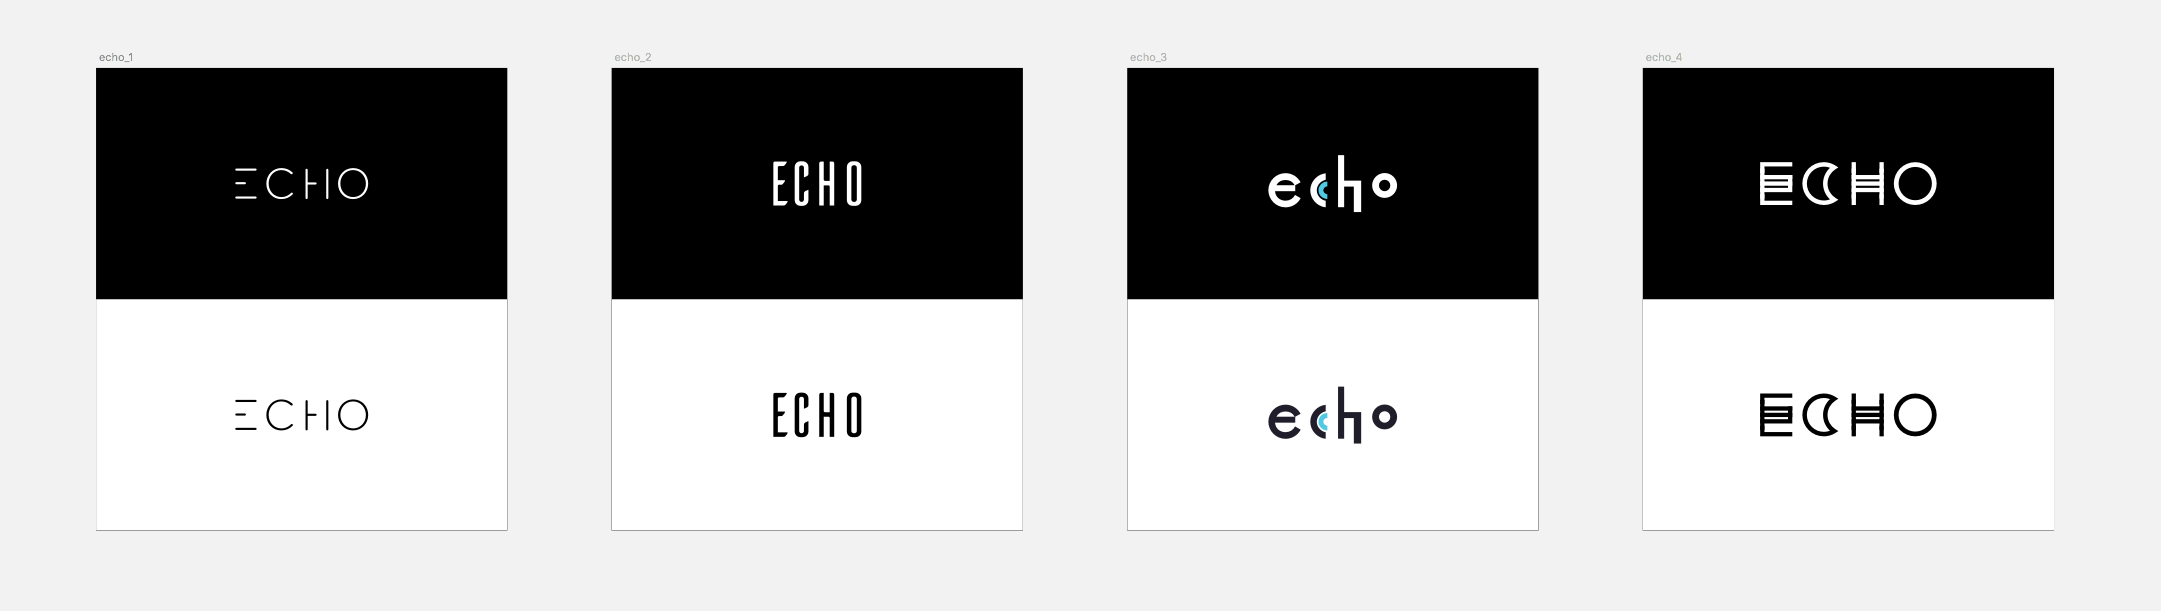 Echo logo exploration apple tv app design